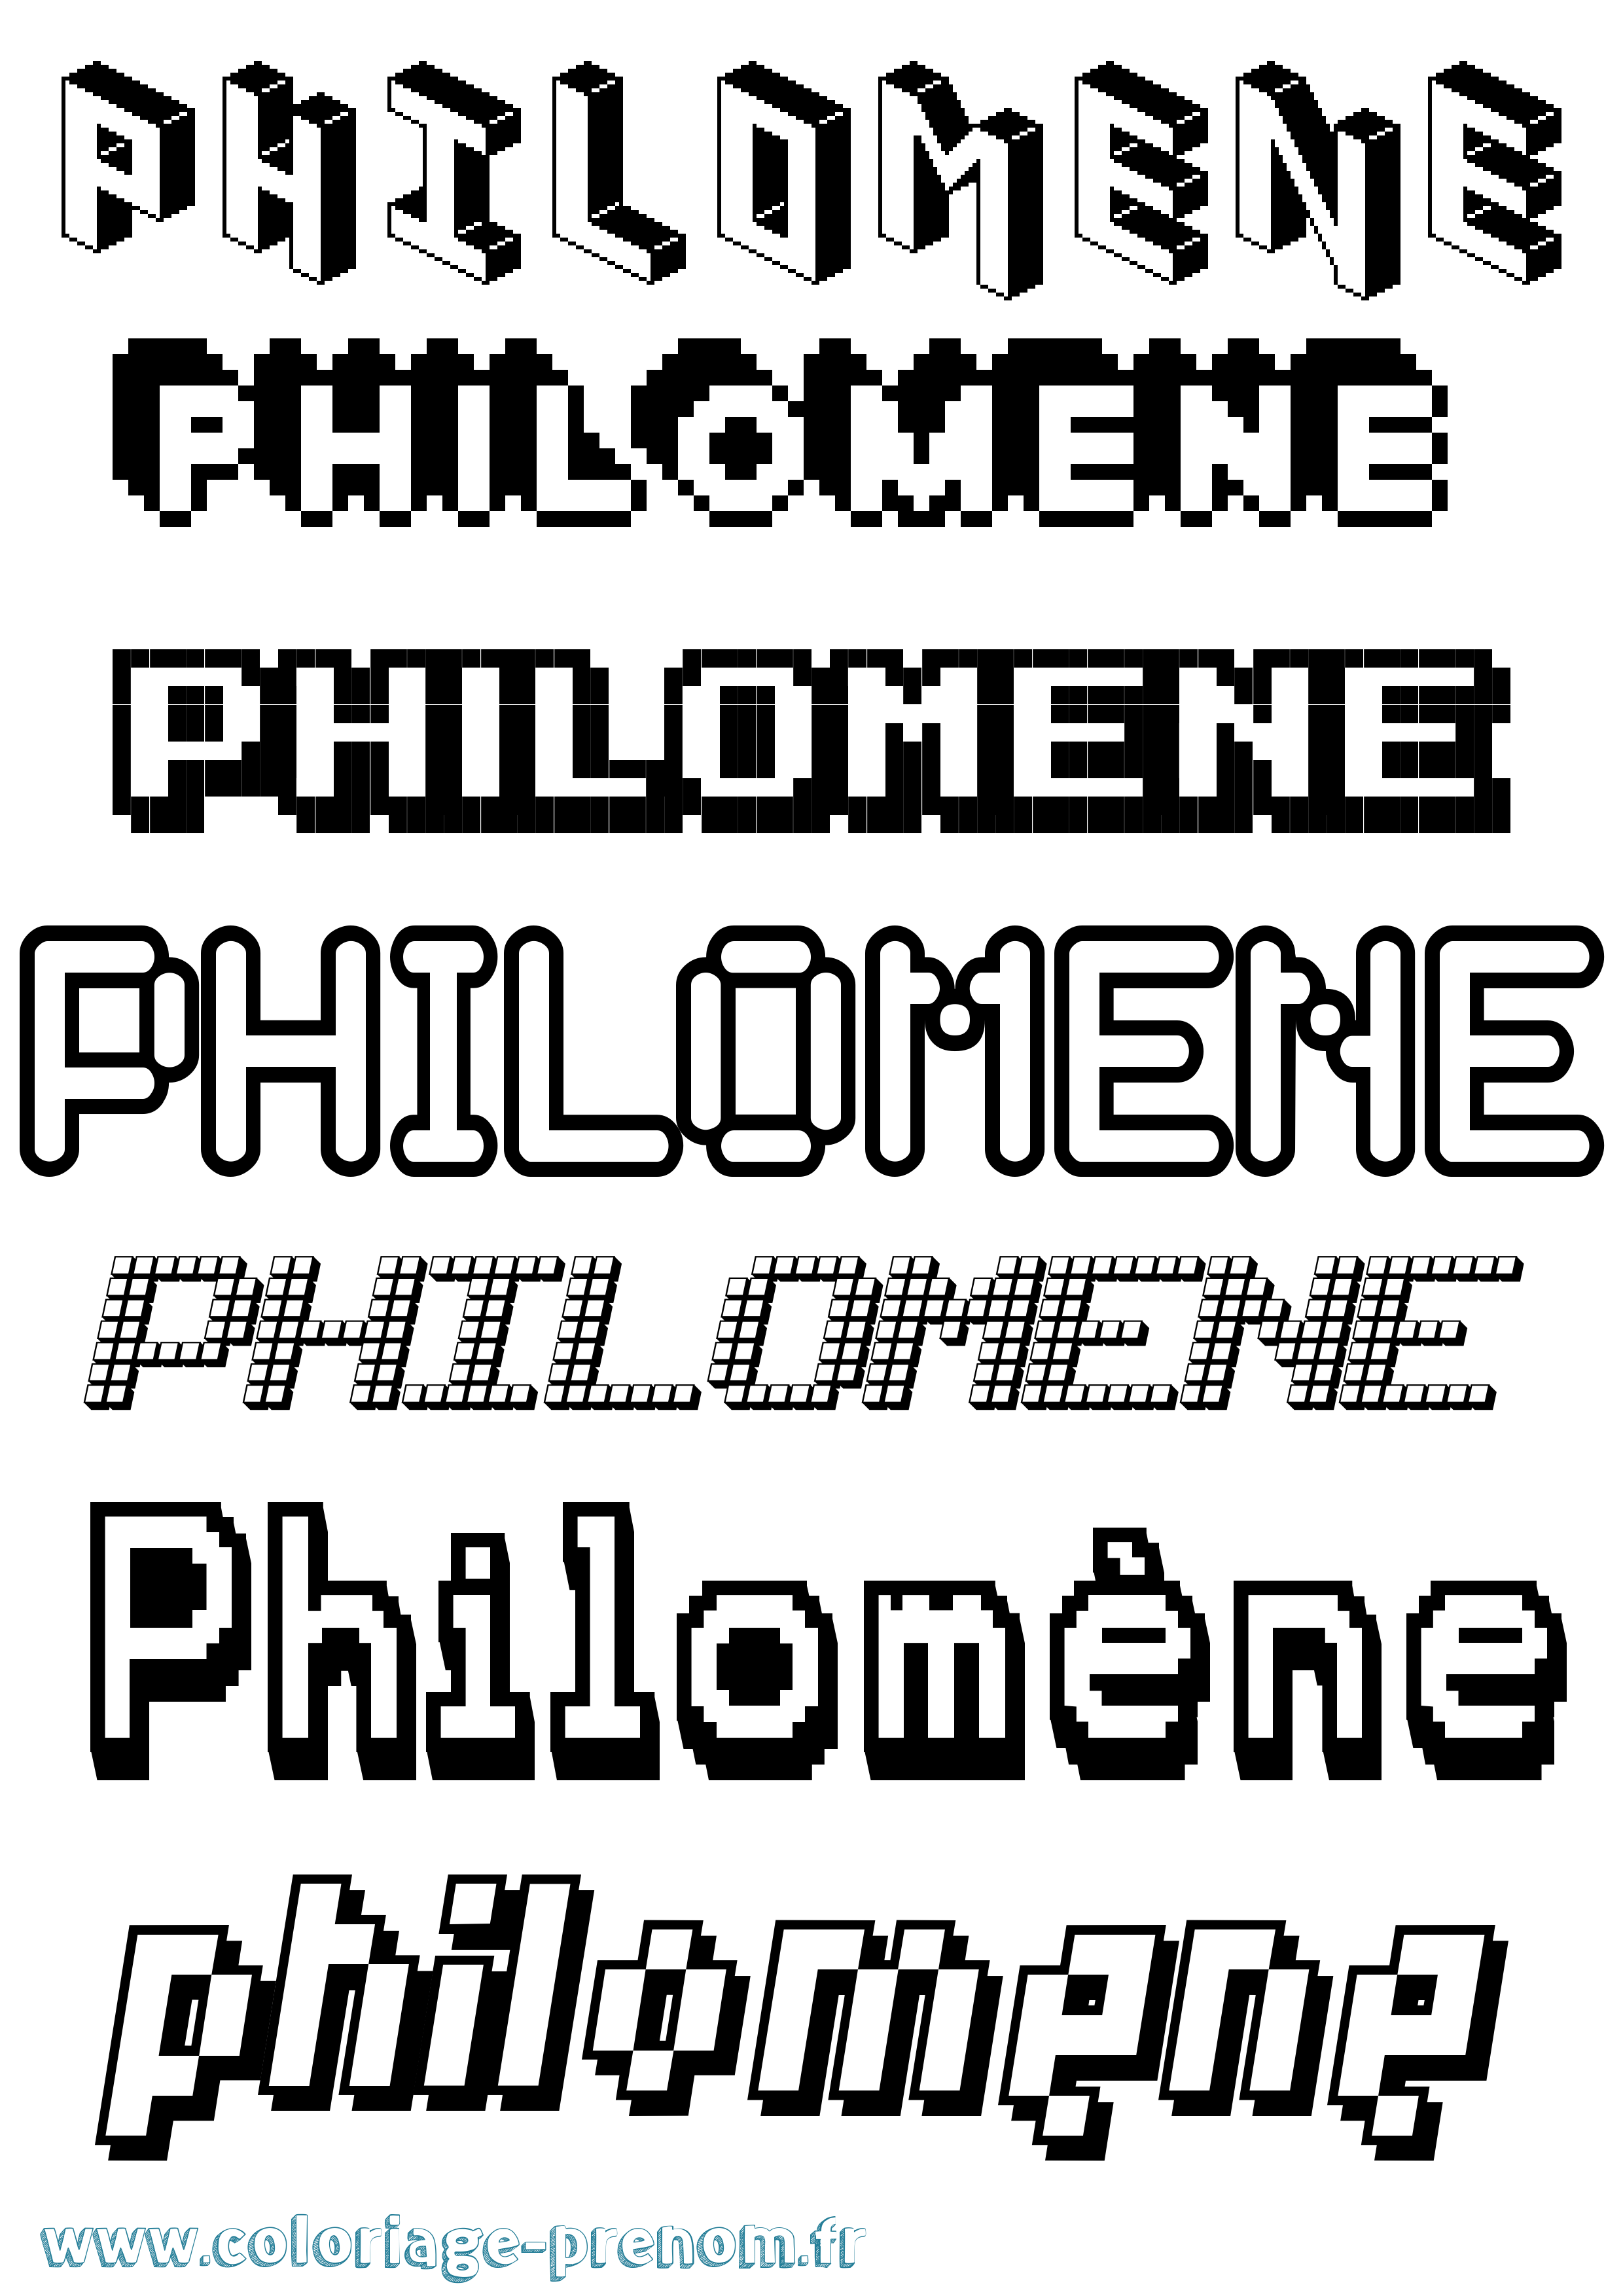 Coloriage prénom Philomène